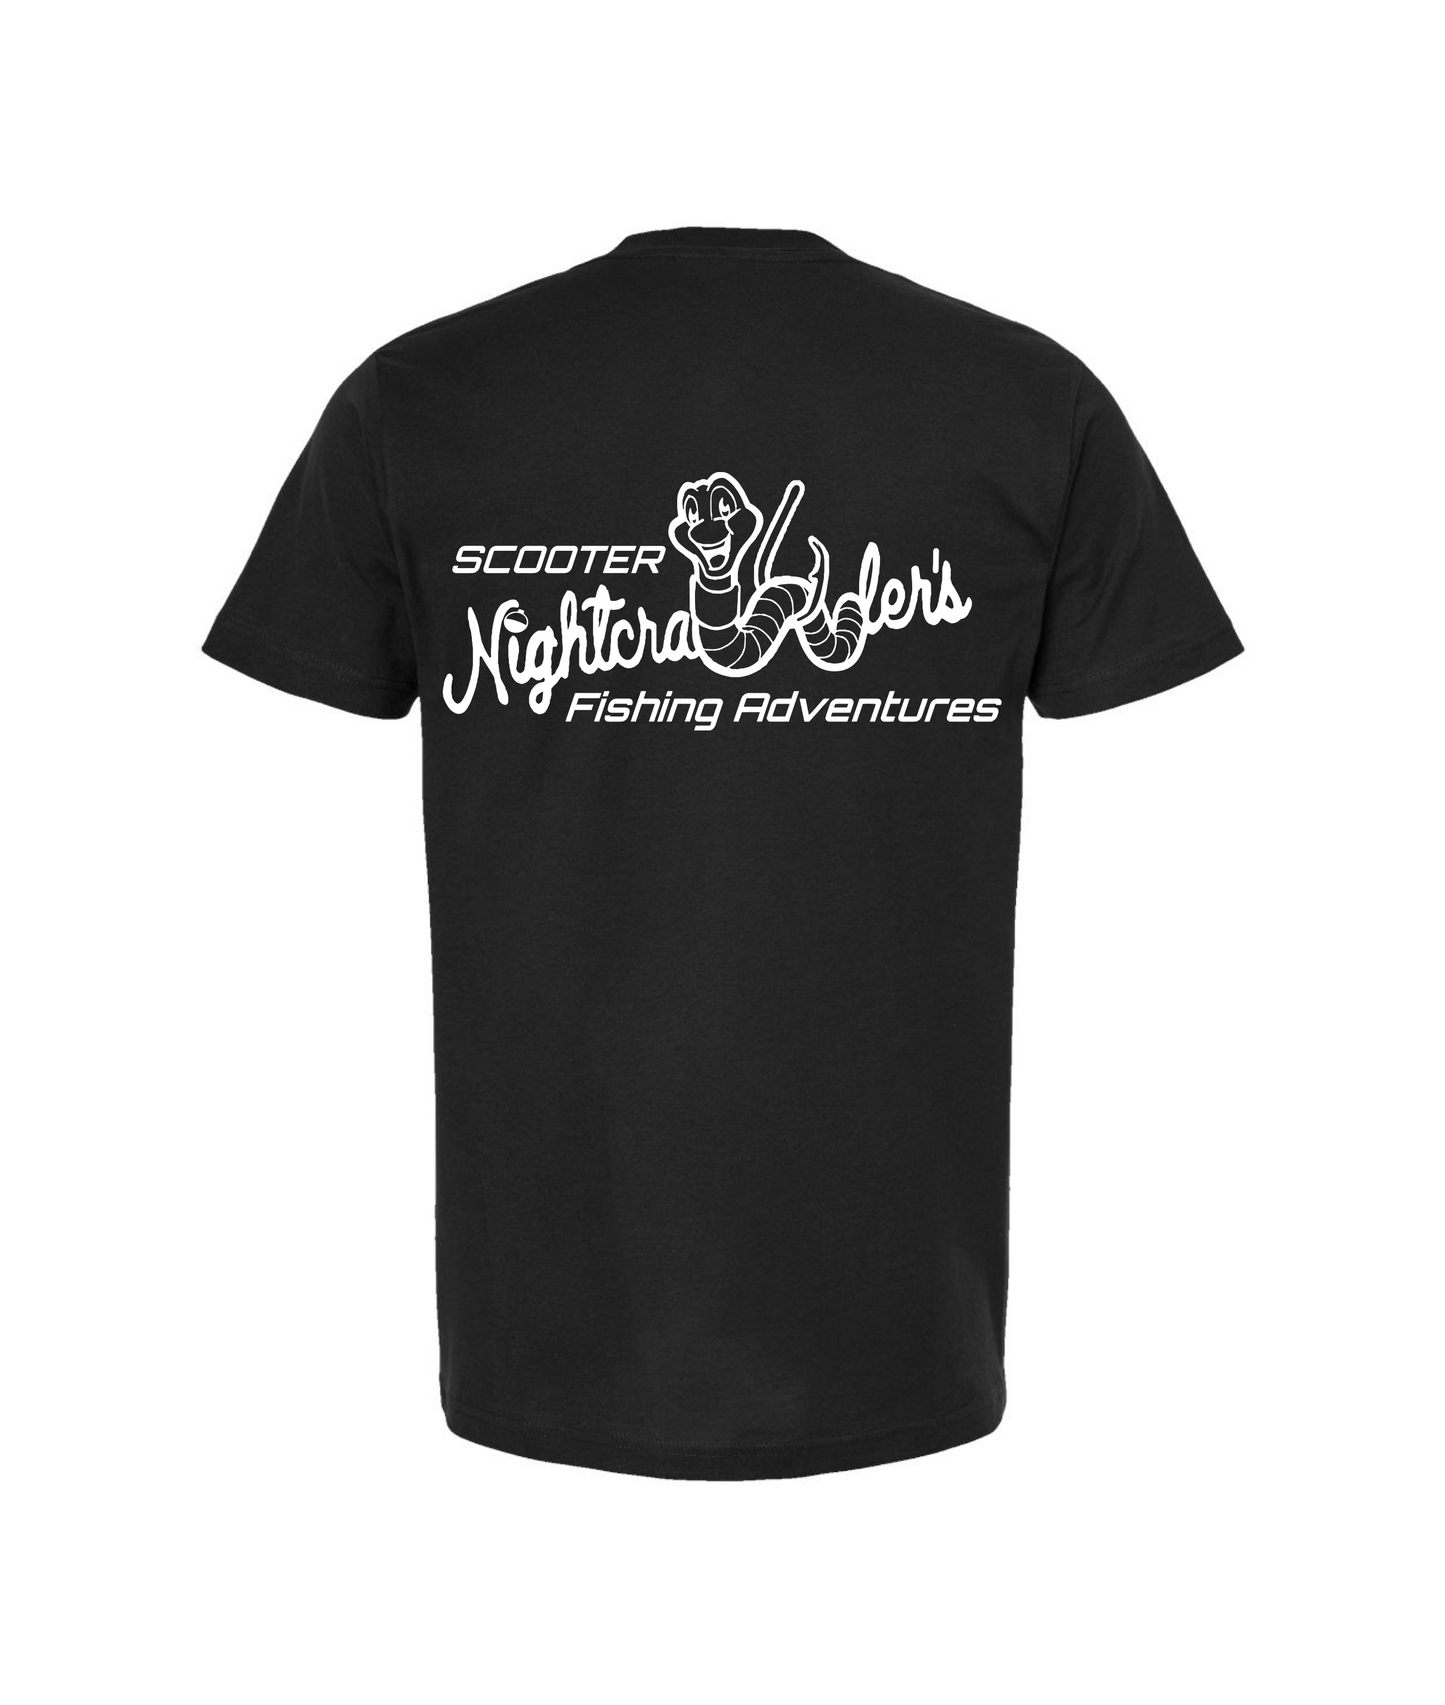 Scooter Nightcrawler - Scooter Nightcrawler BW - Black T Shirt